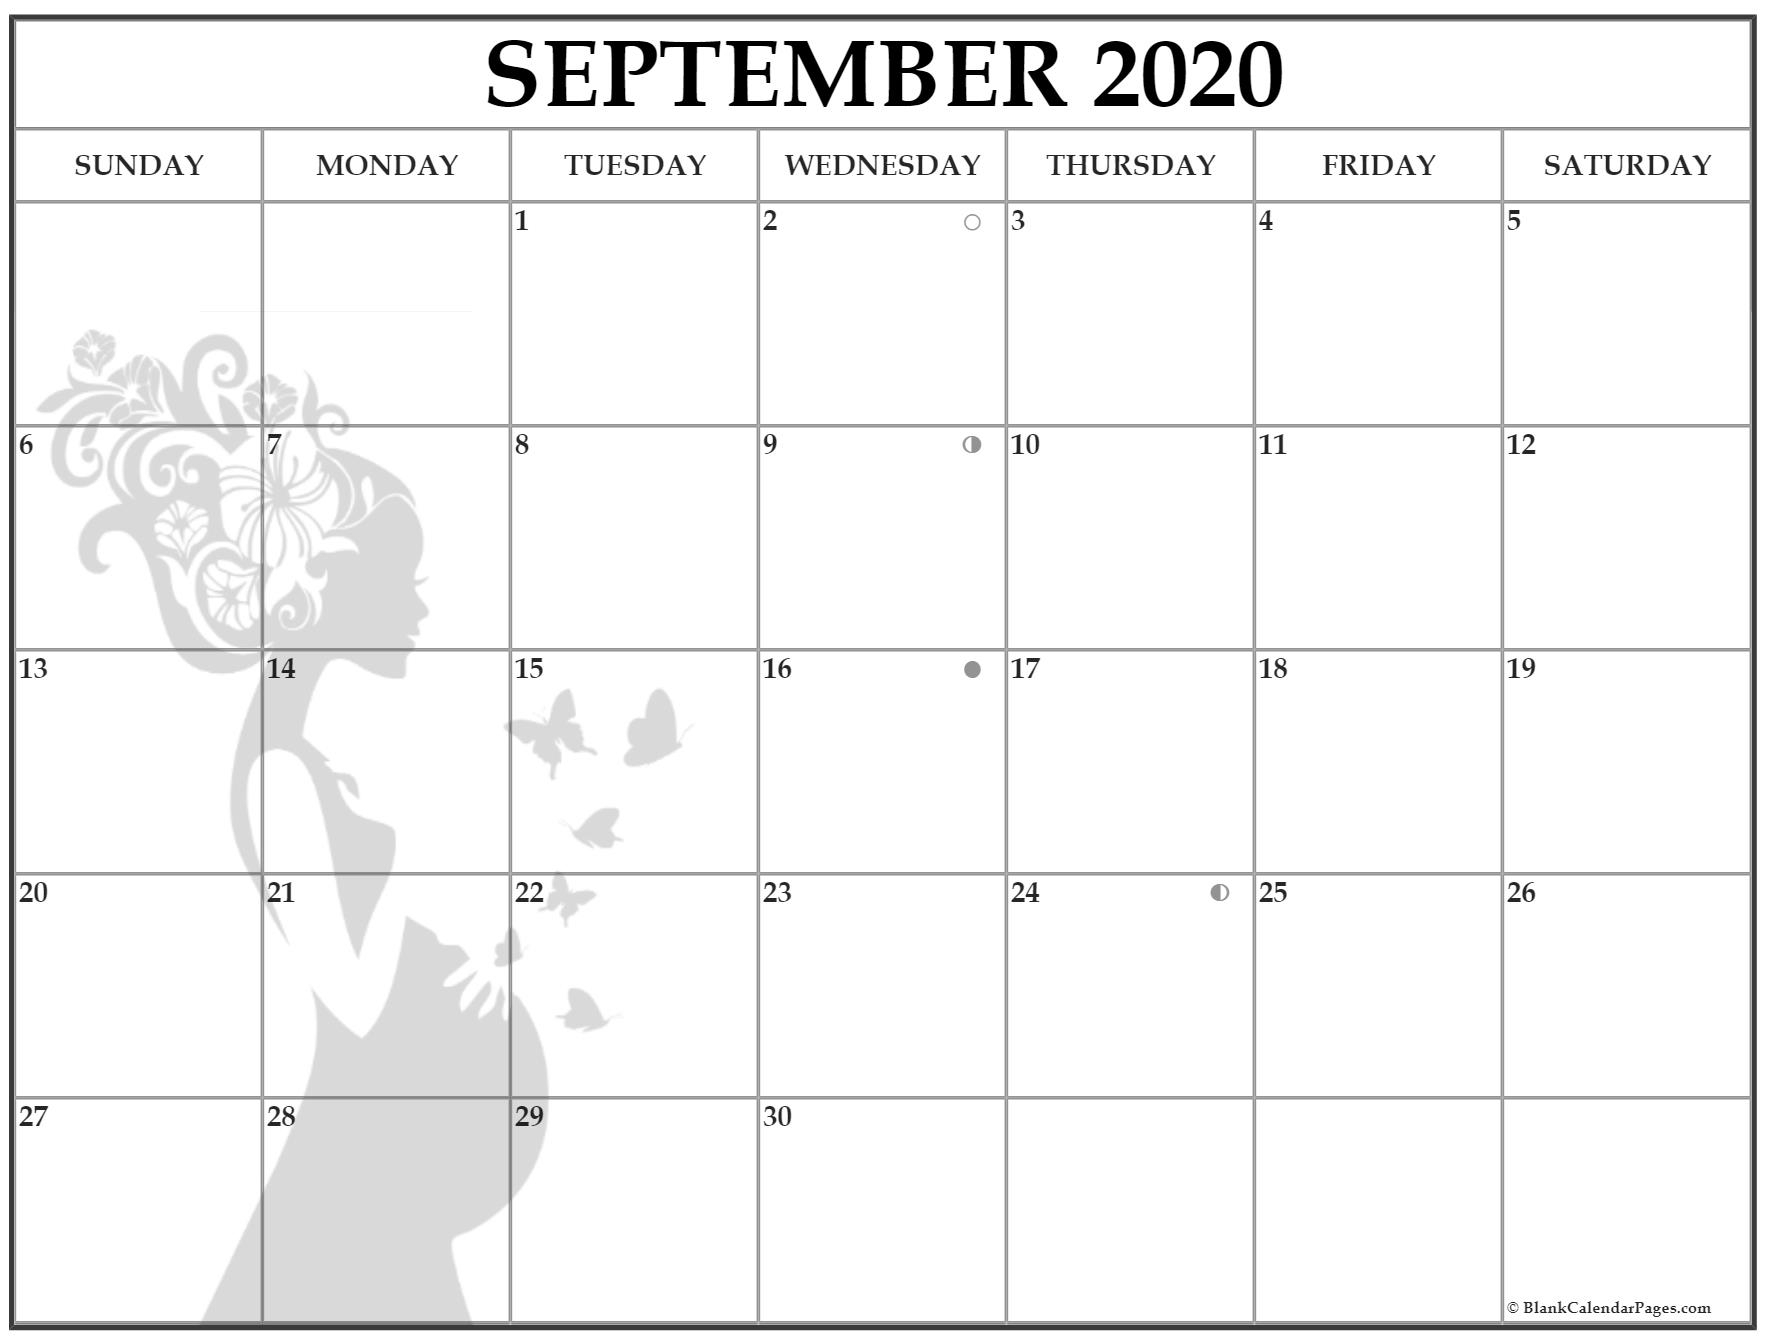 September 2020 Pregnancy Calendar | Fertility Calendar